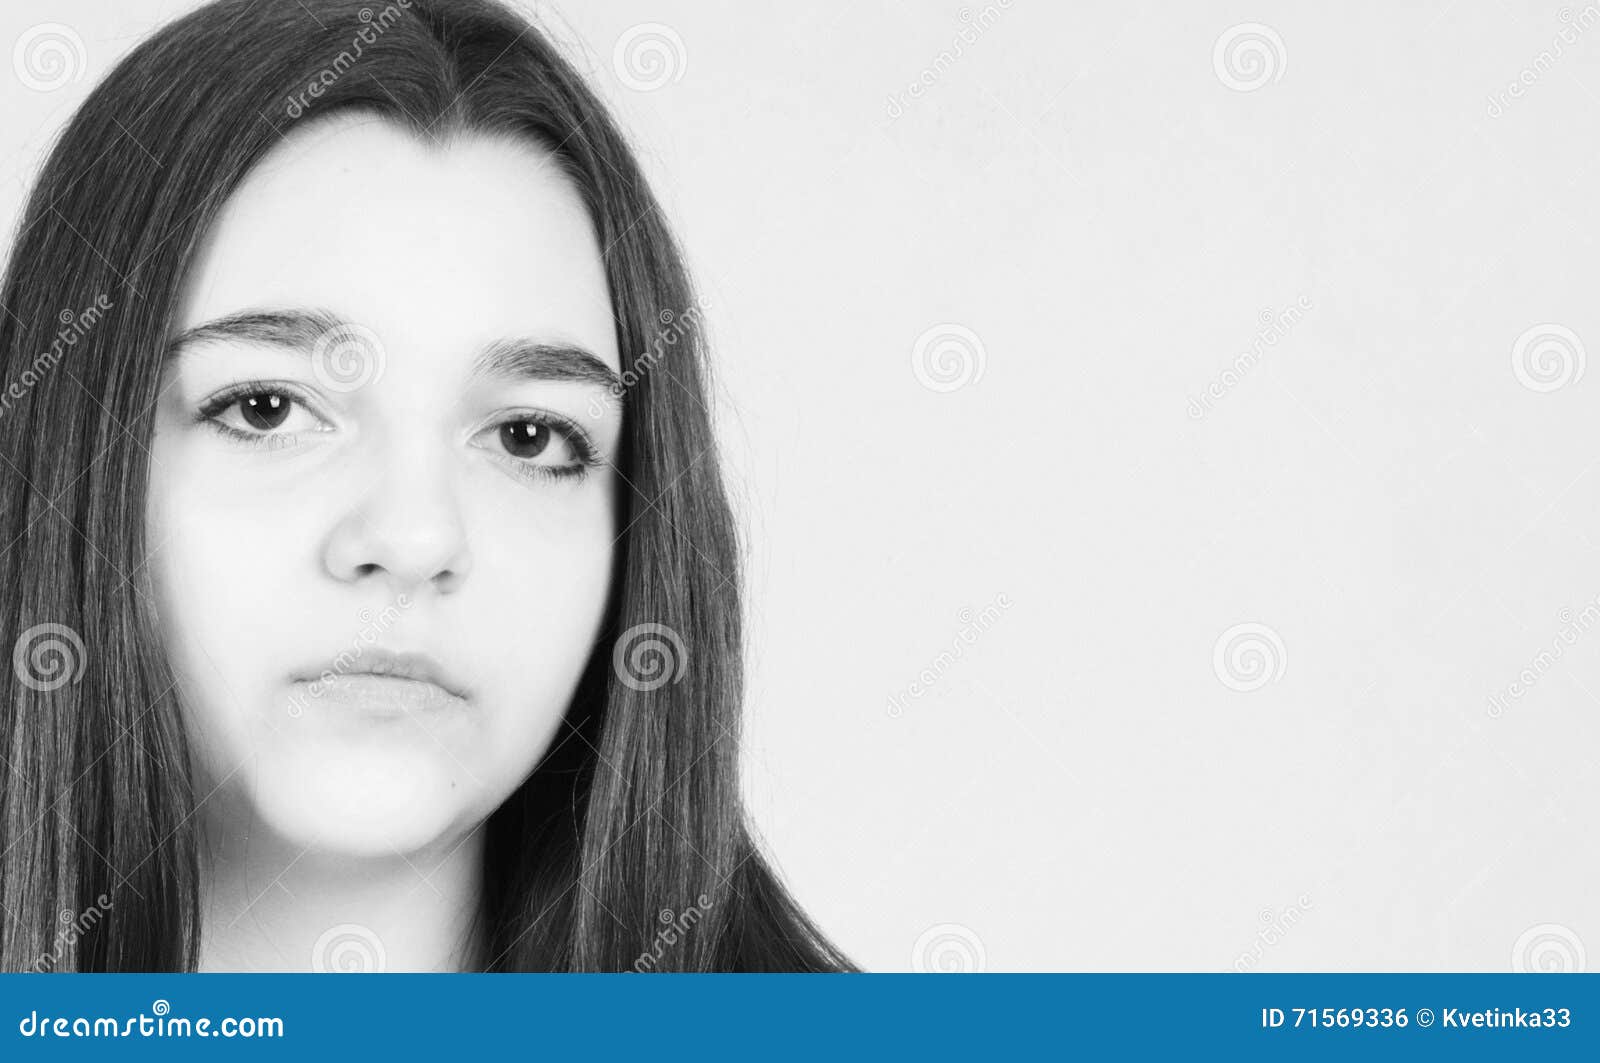 Innocent teen girl face